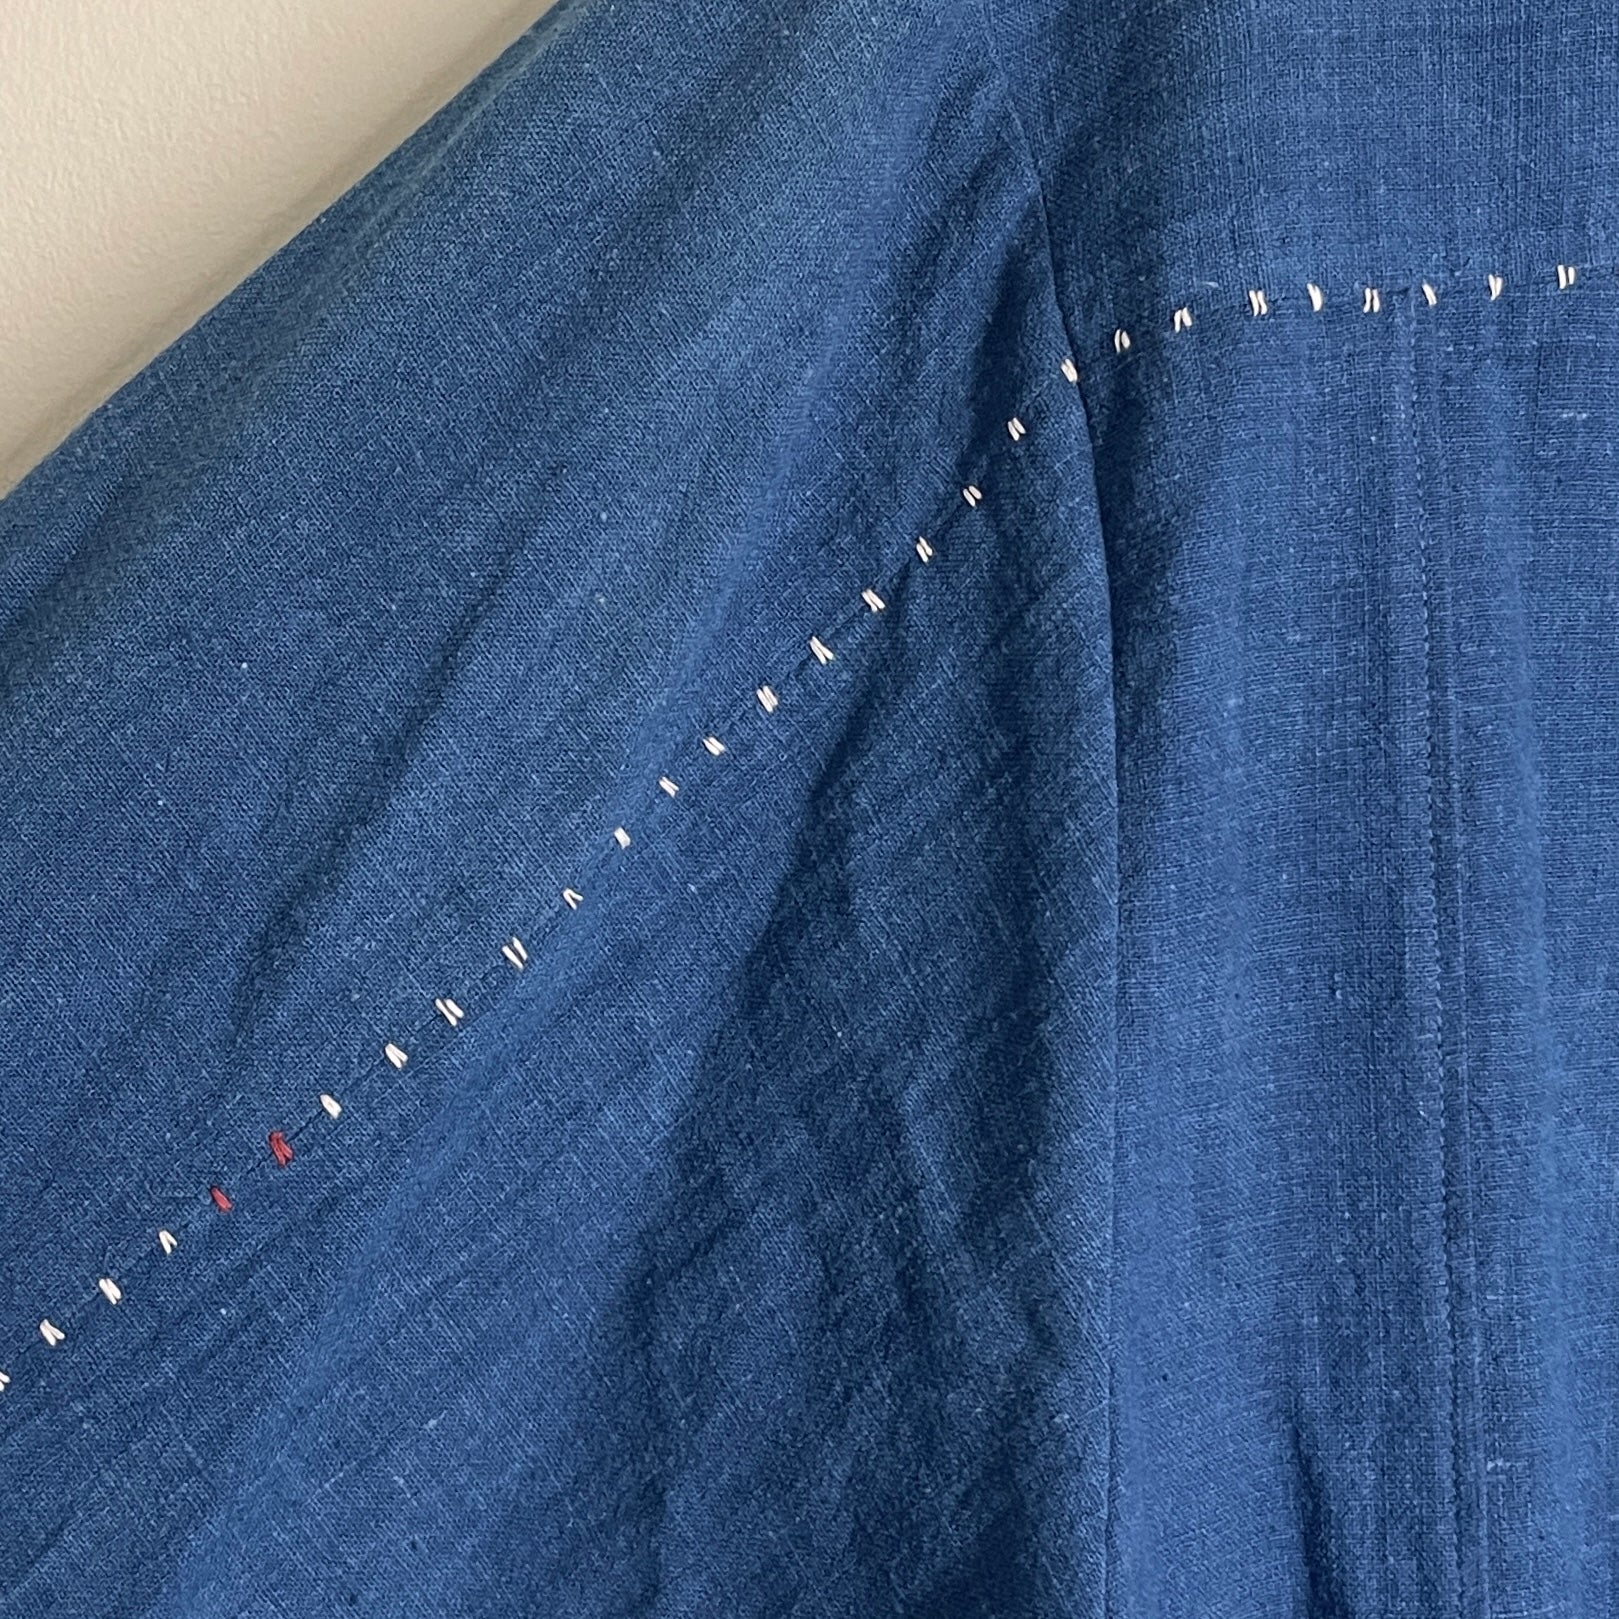 16: Embroidered Indigo Long Sleeve Button Down